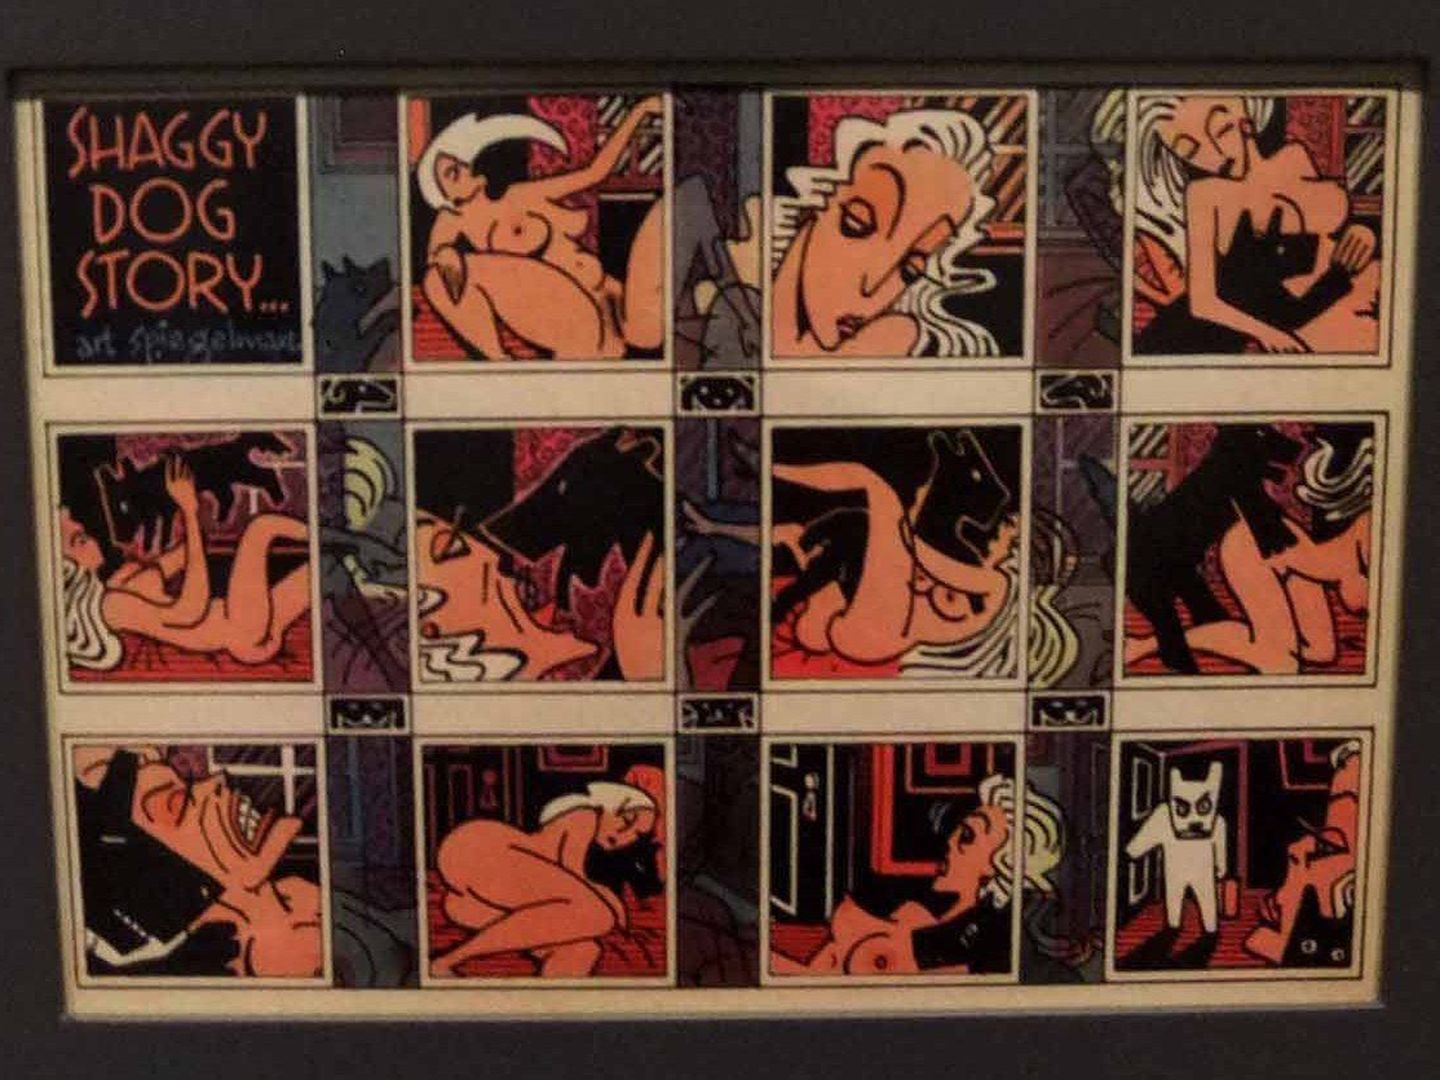 'Shaggy Dog Story', publicada por Spiegelman en 1979 en 'Playboy'.